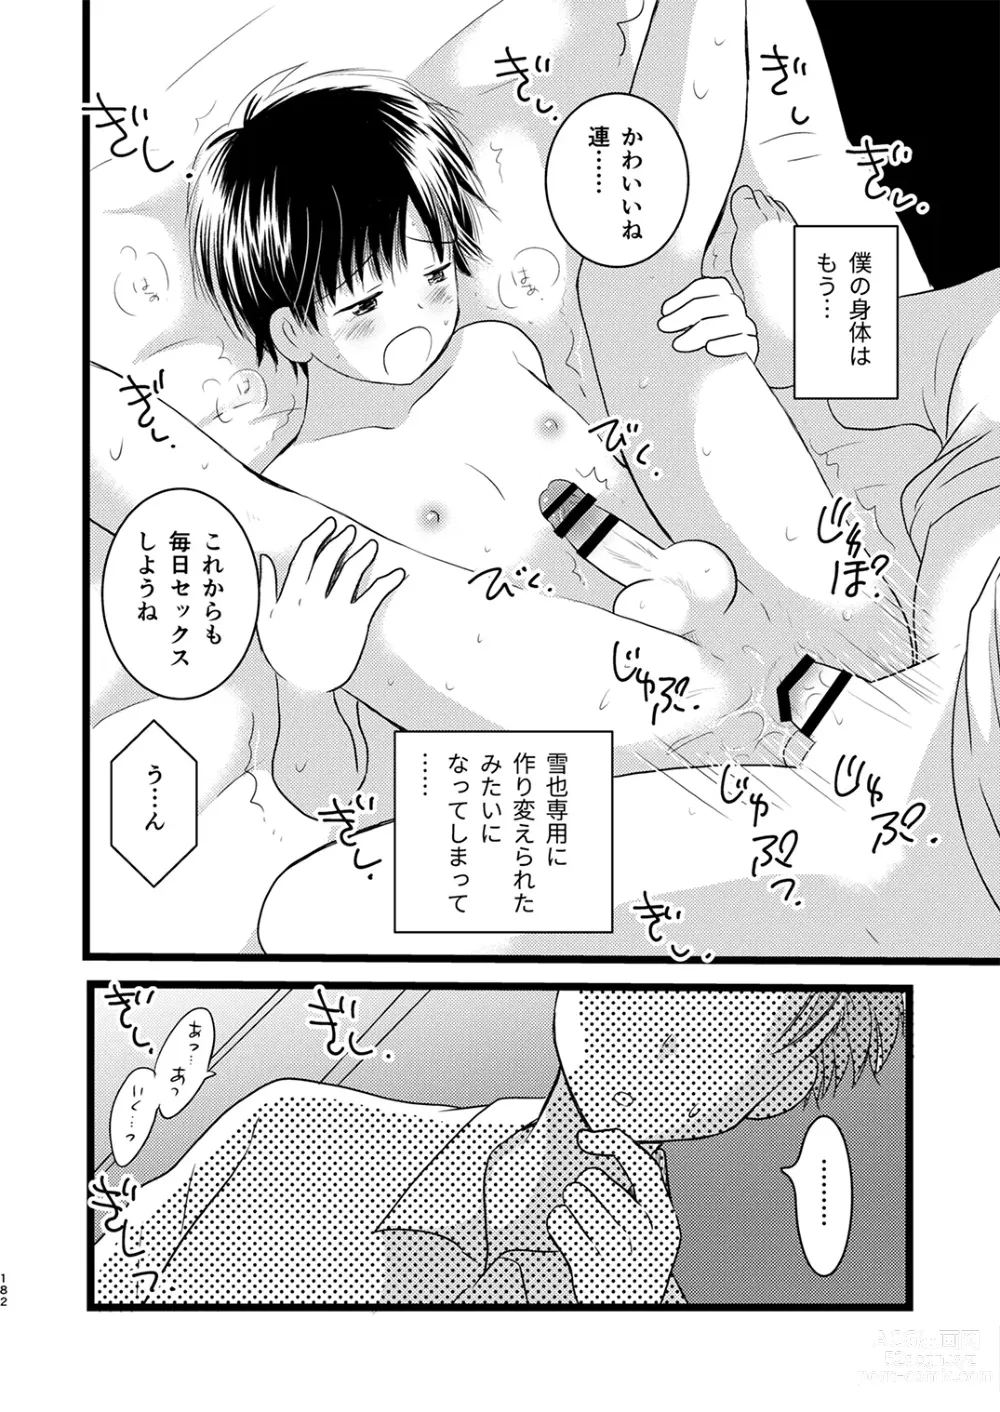 Page 181 of manga Juvenile 2023-12